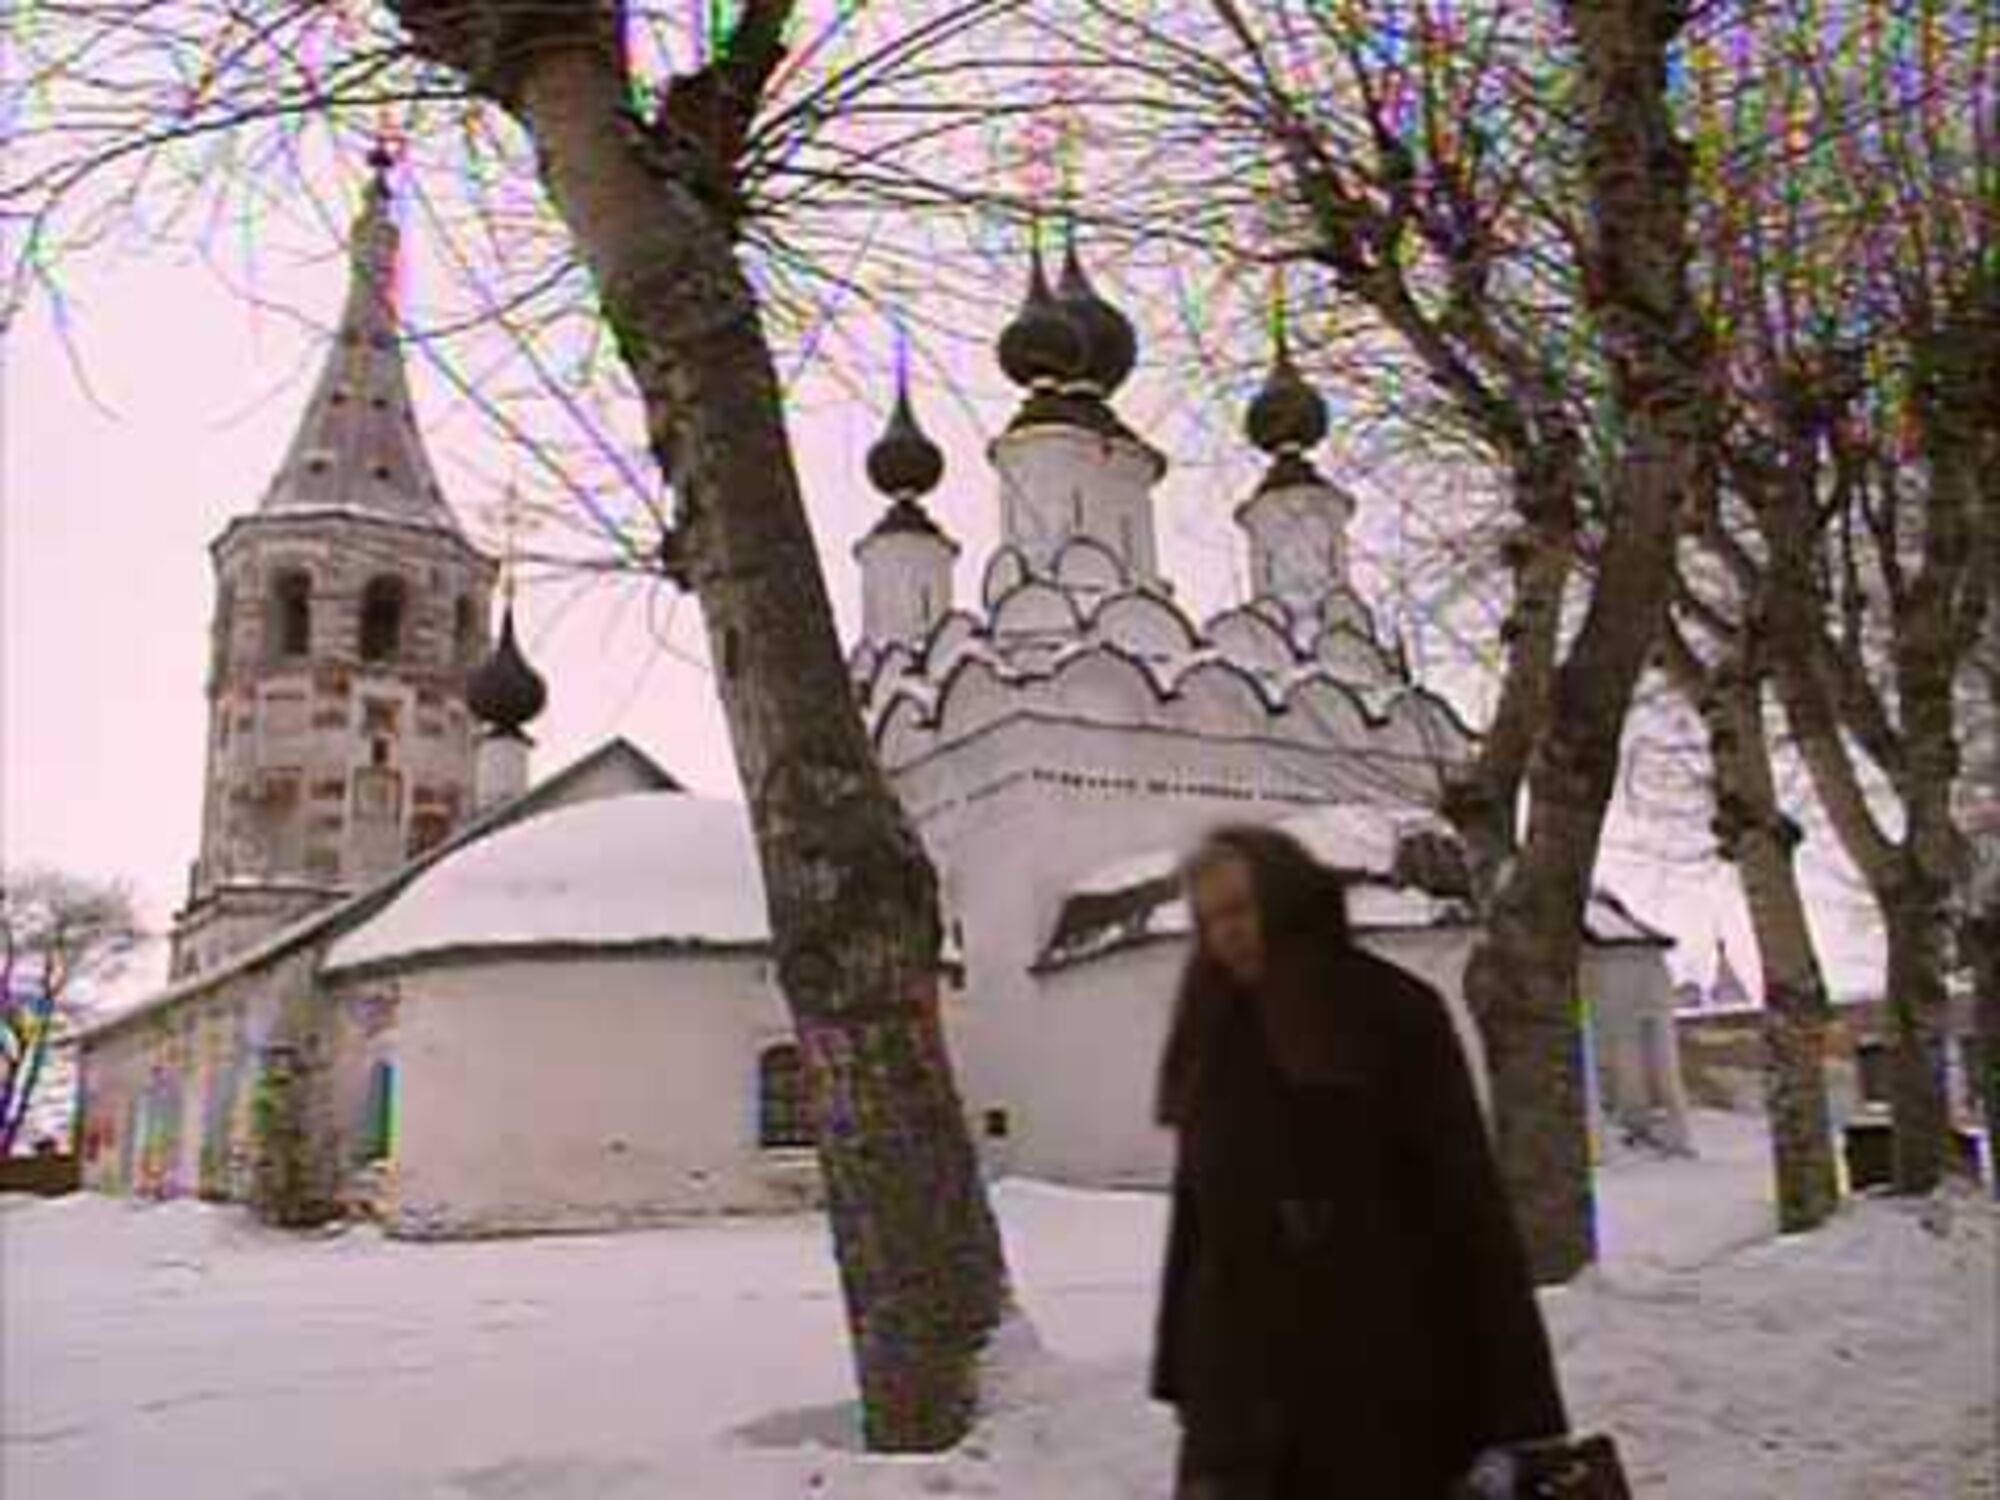 11 - Kaliadka / Калядки (Russian Christmas)